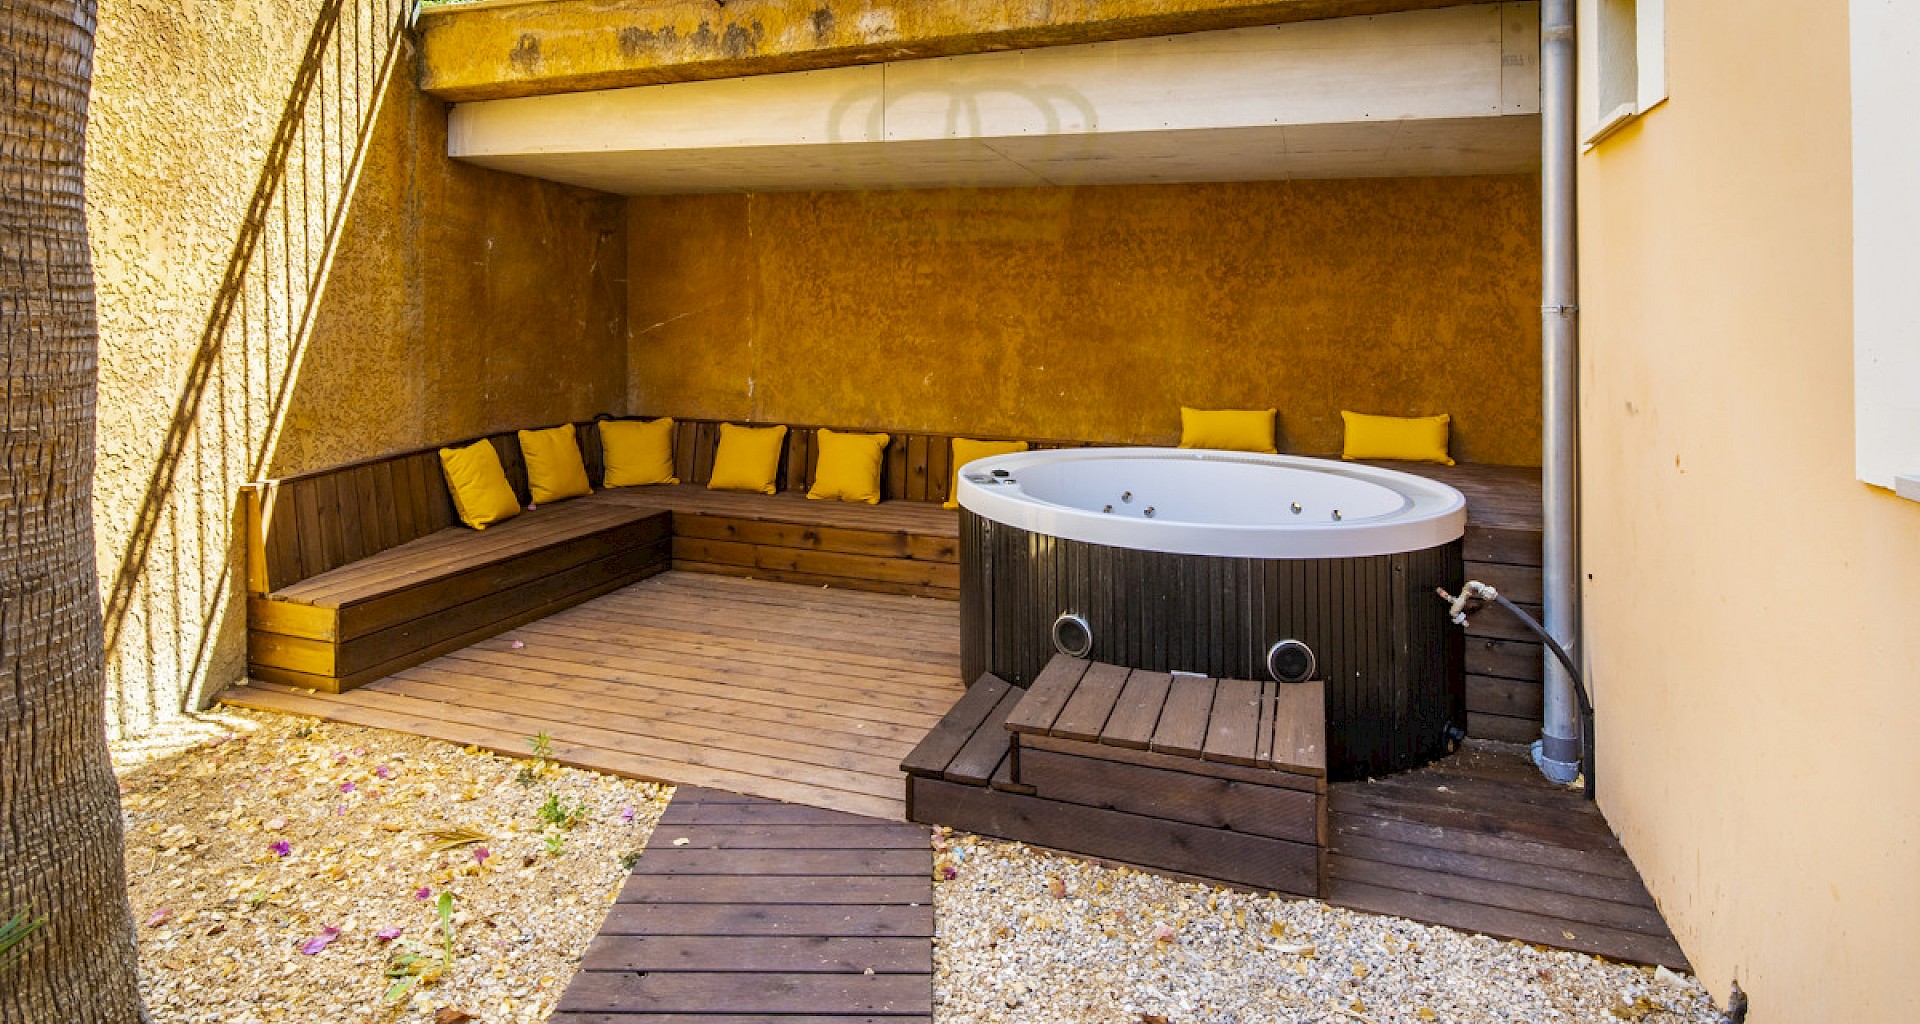 KROHN & LUEDEMANN Appartement de jardin moderne à Camp de Mar avec une superbe piscine 